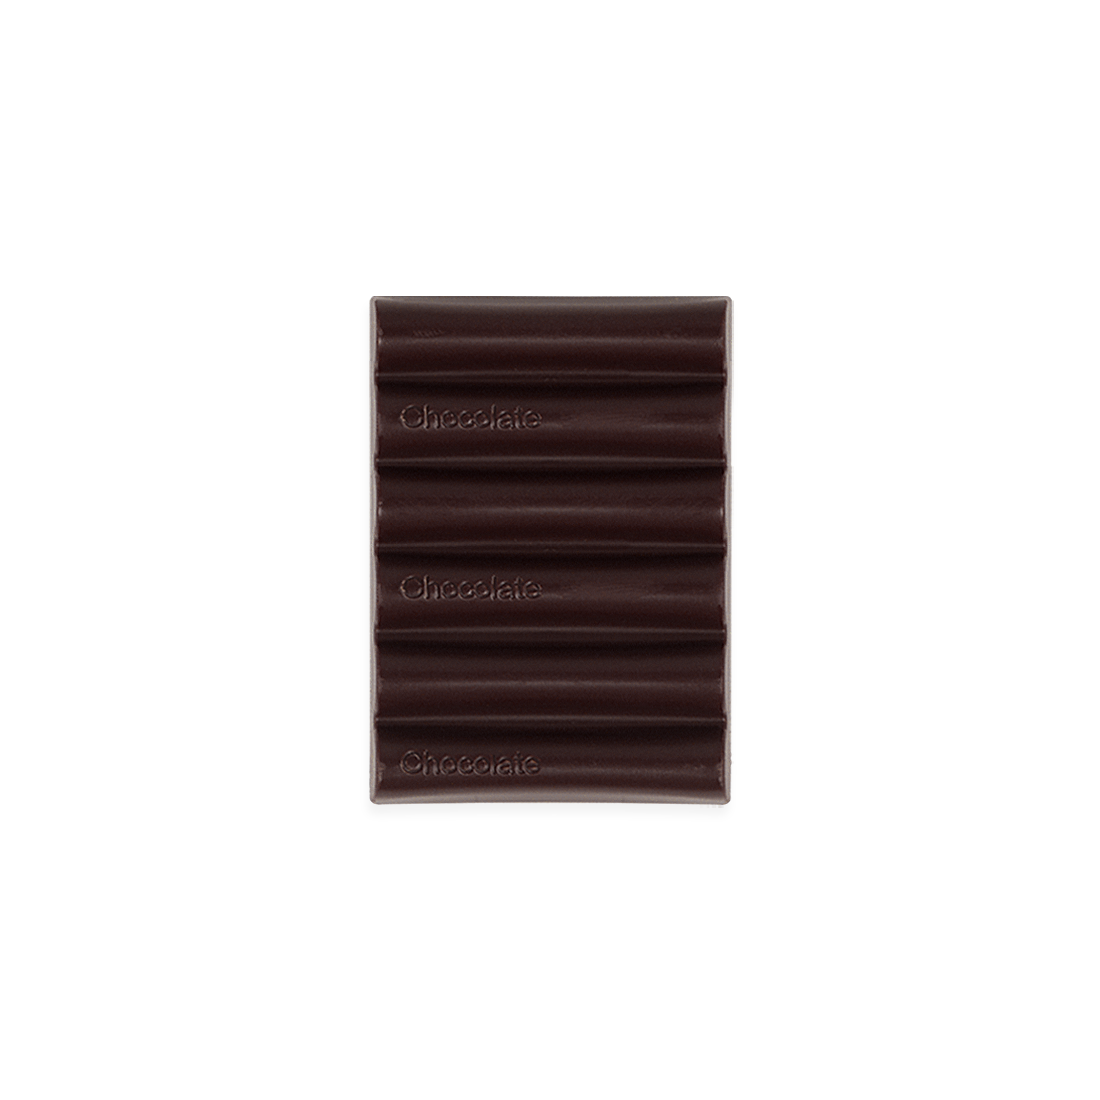 Winter Collection – 6 Baton Bar - Vegan Dark Chocolate - 71% Cocoa